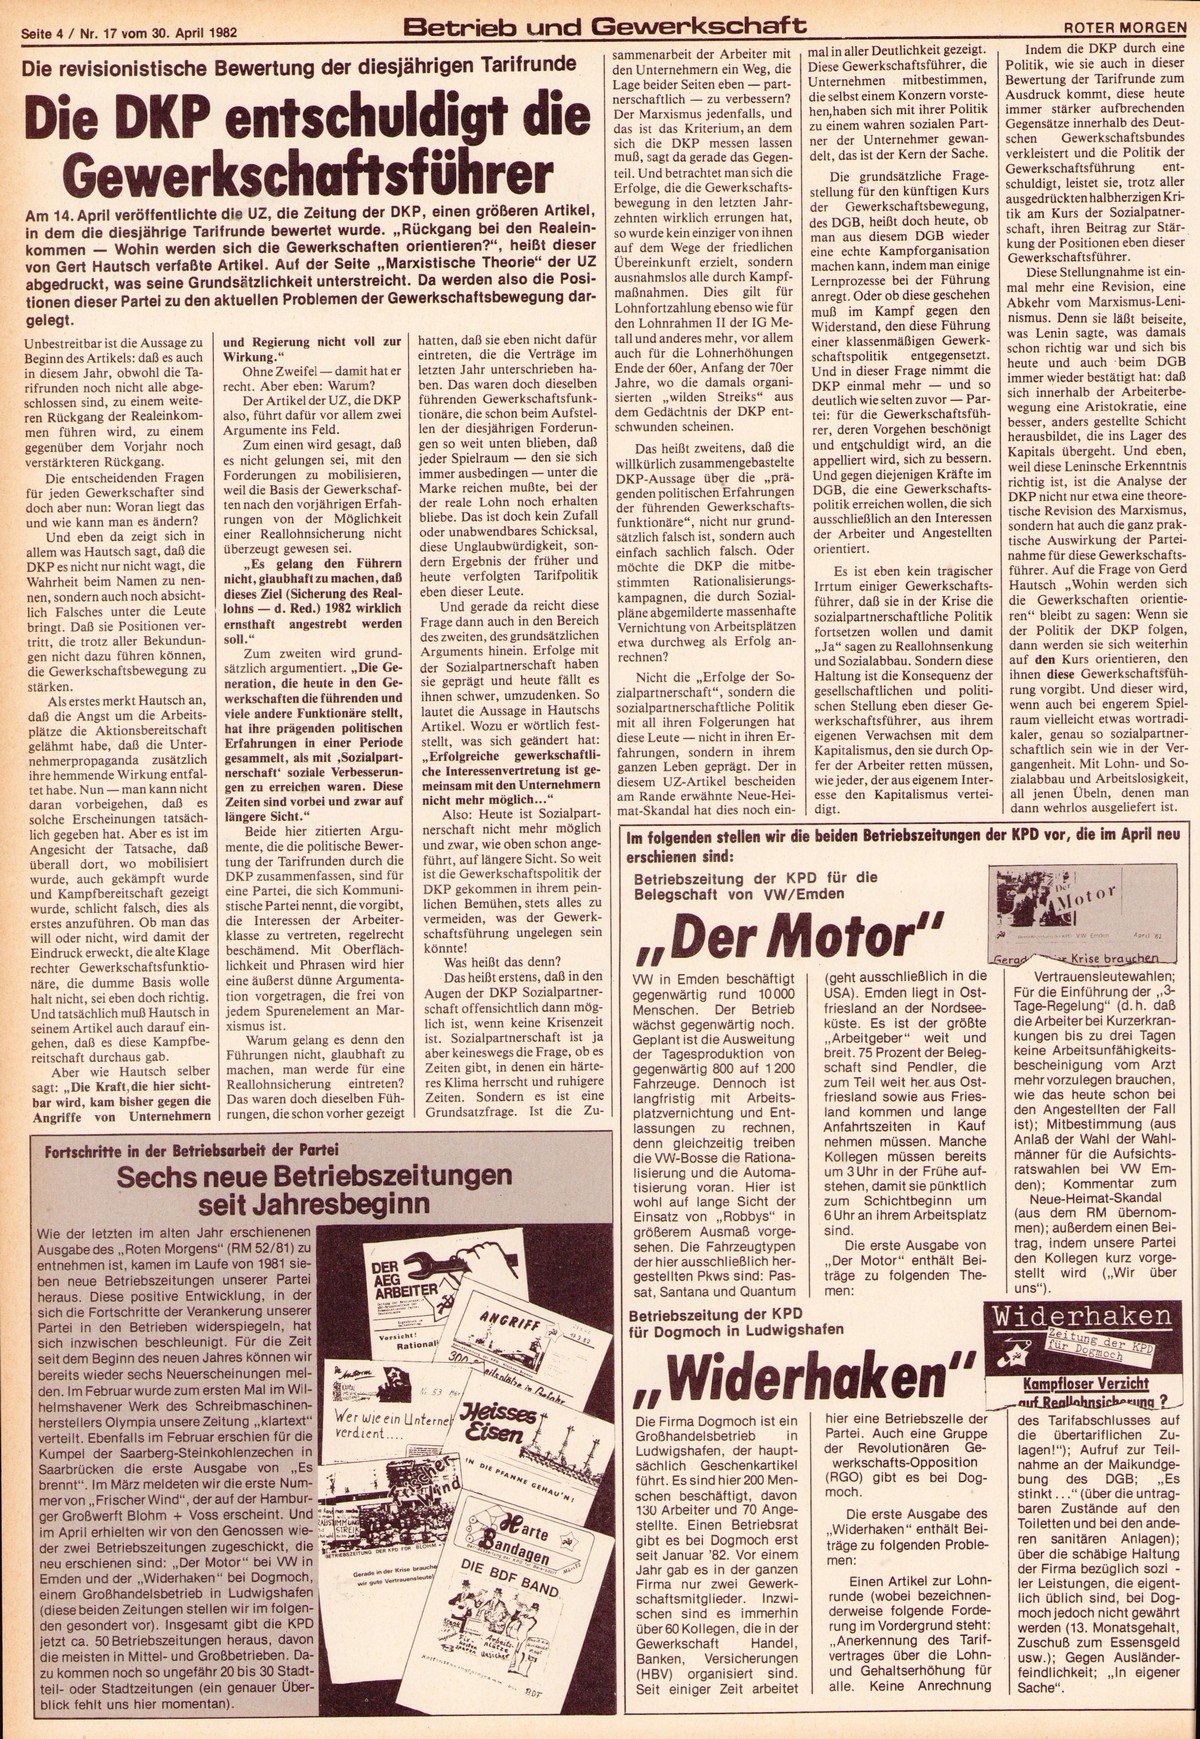 Roter Morgen, 16. Jg., 30. April 1982, Nr. 17, Seite 4